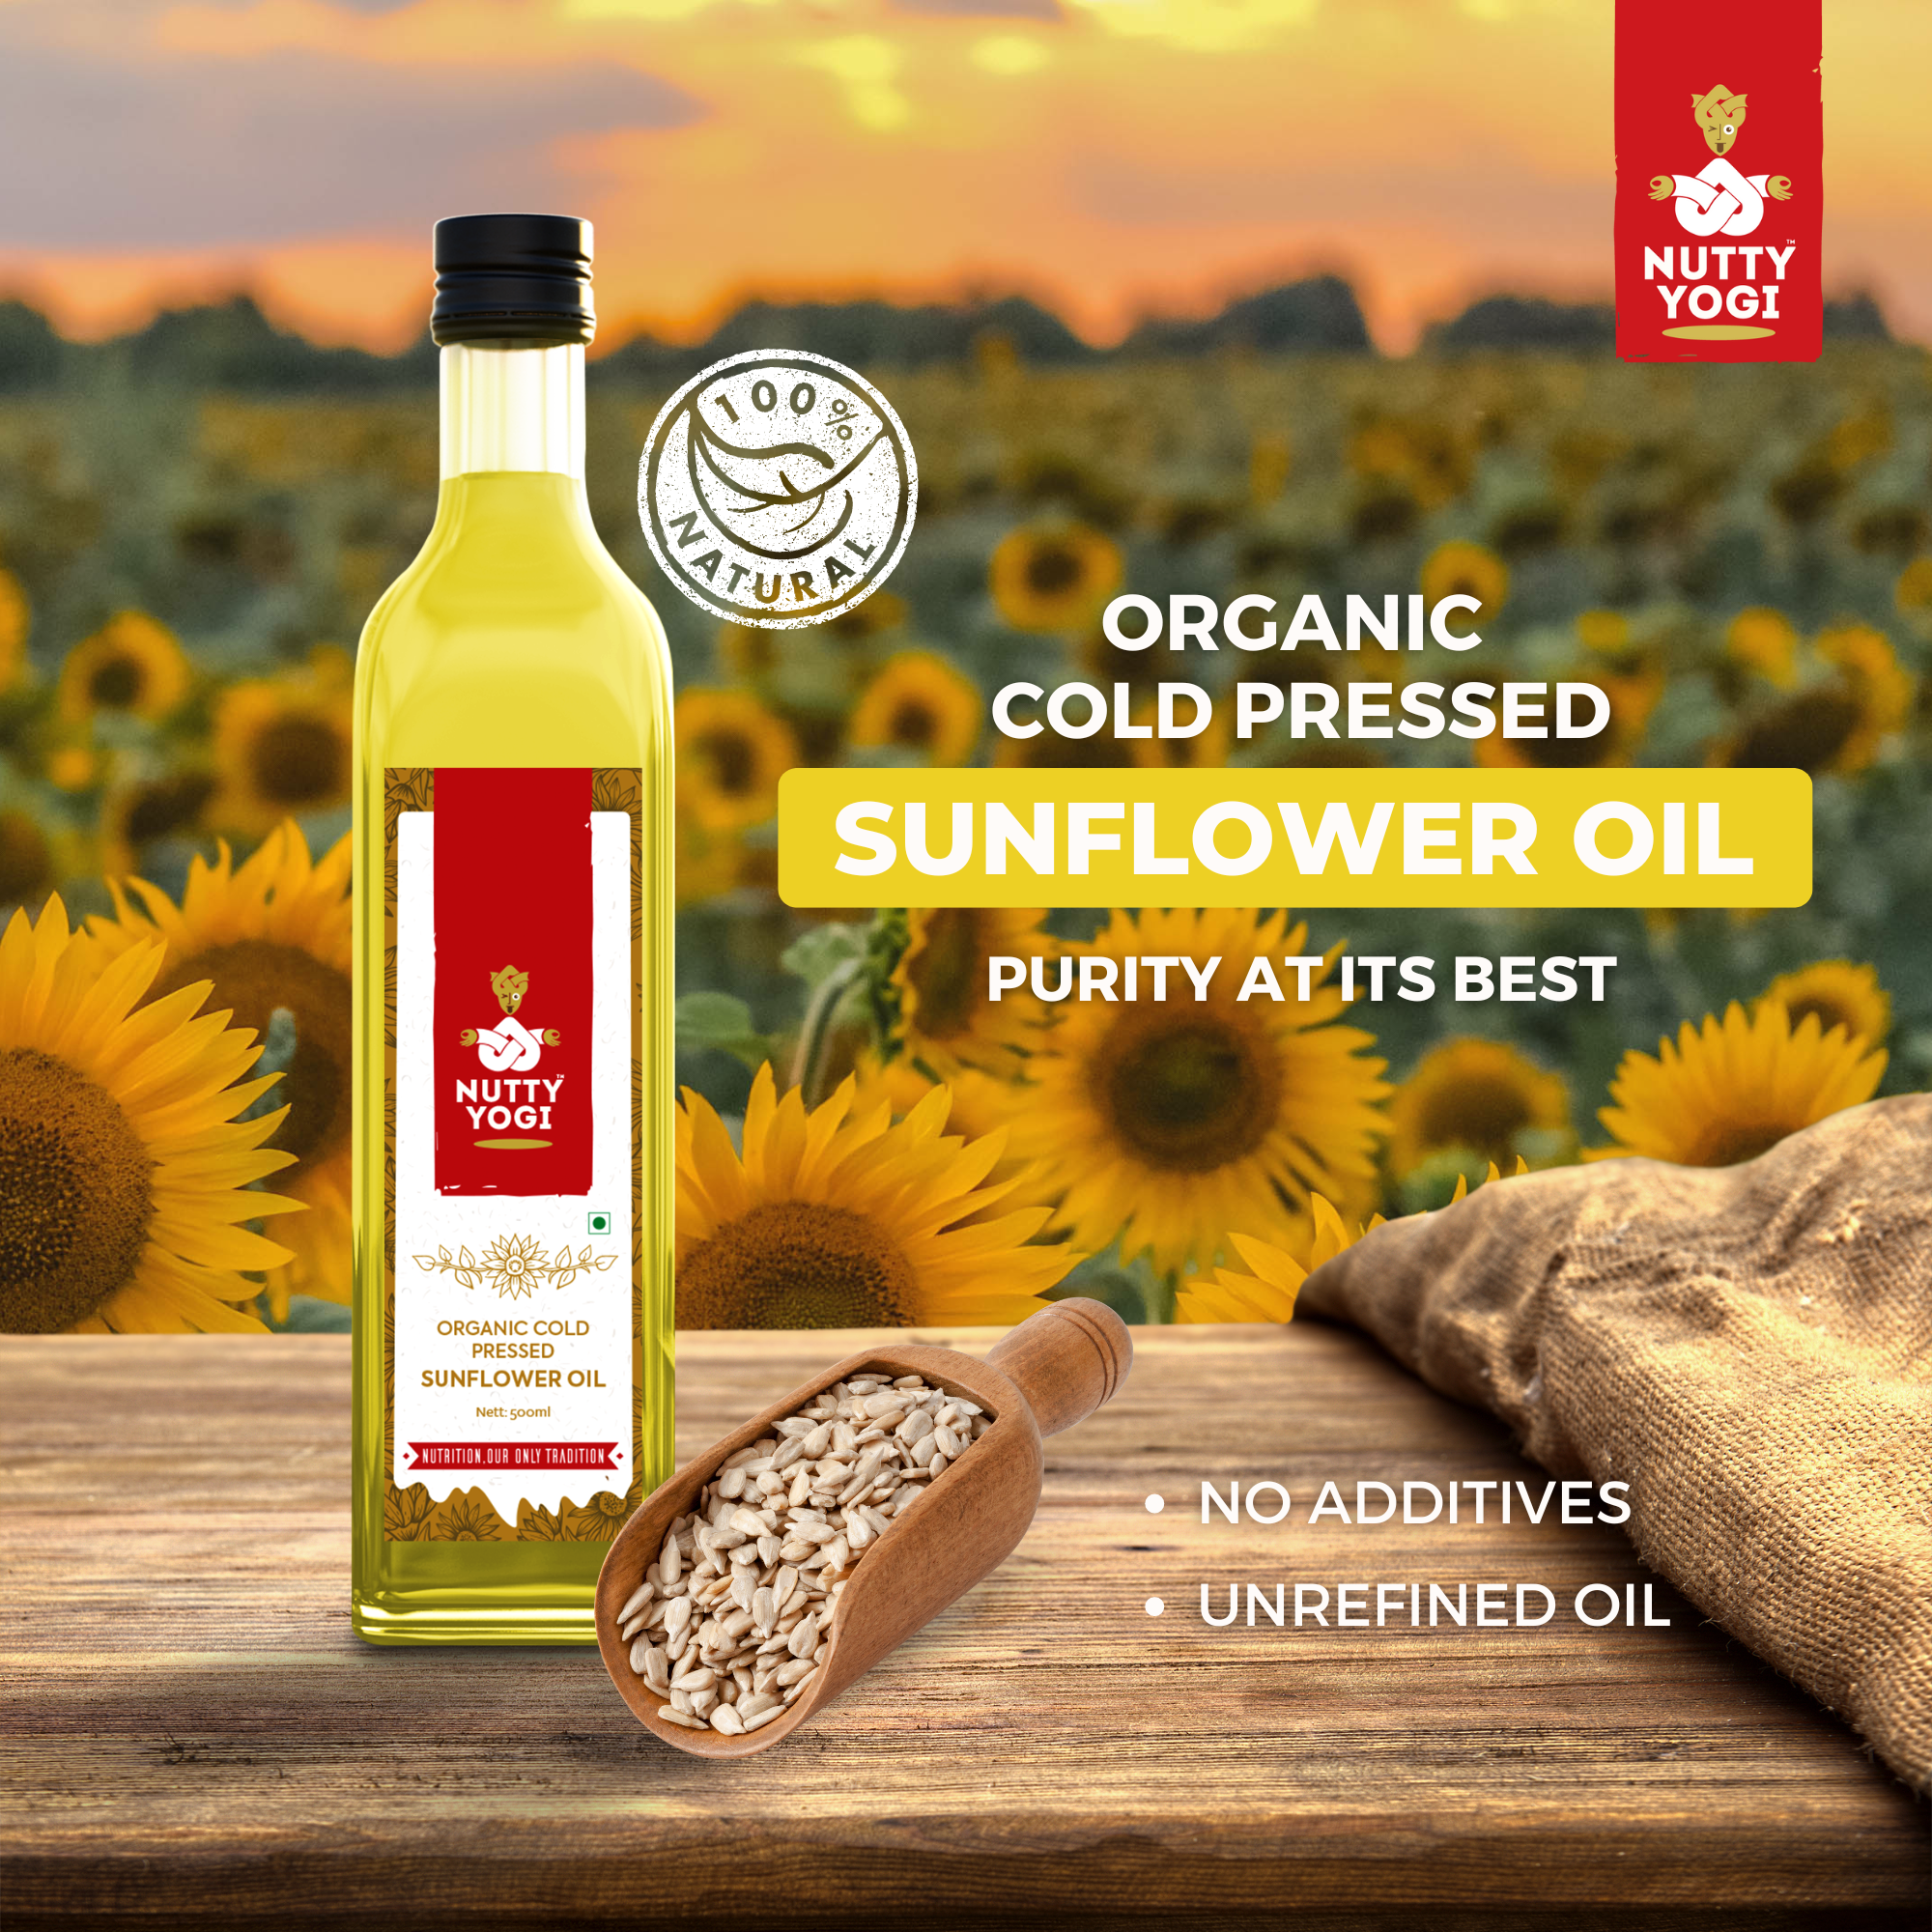 Nutty Yogi Organic Sunflower Oil